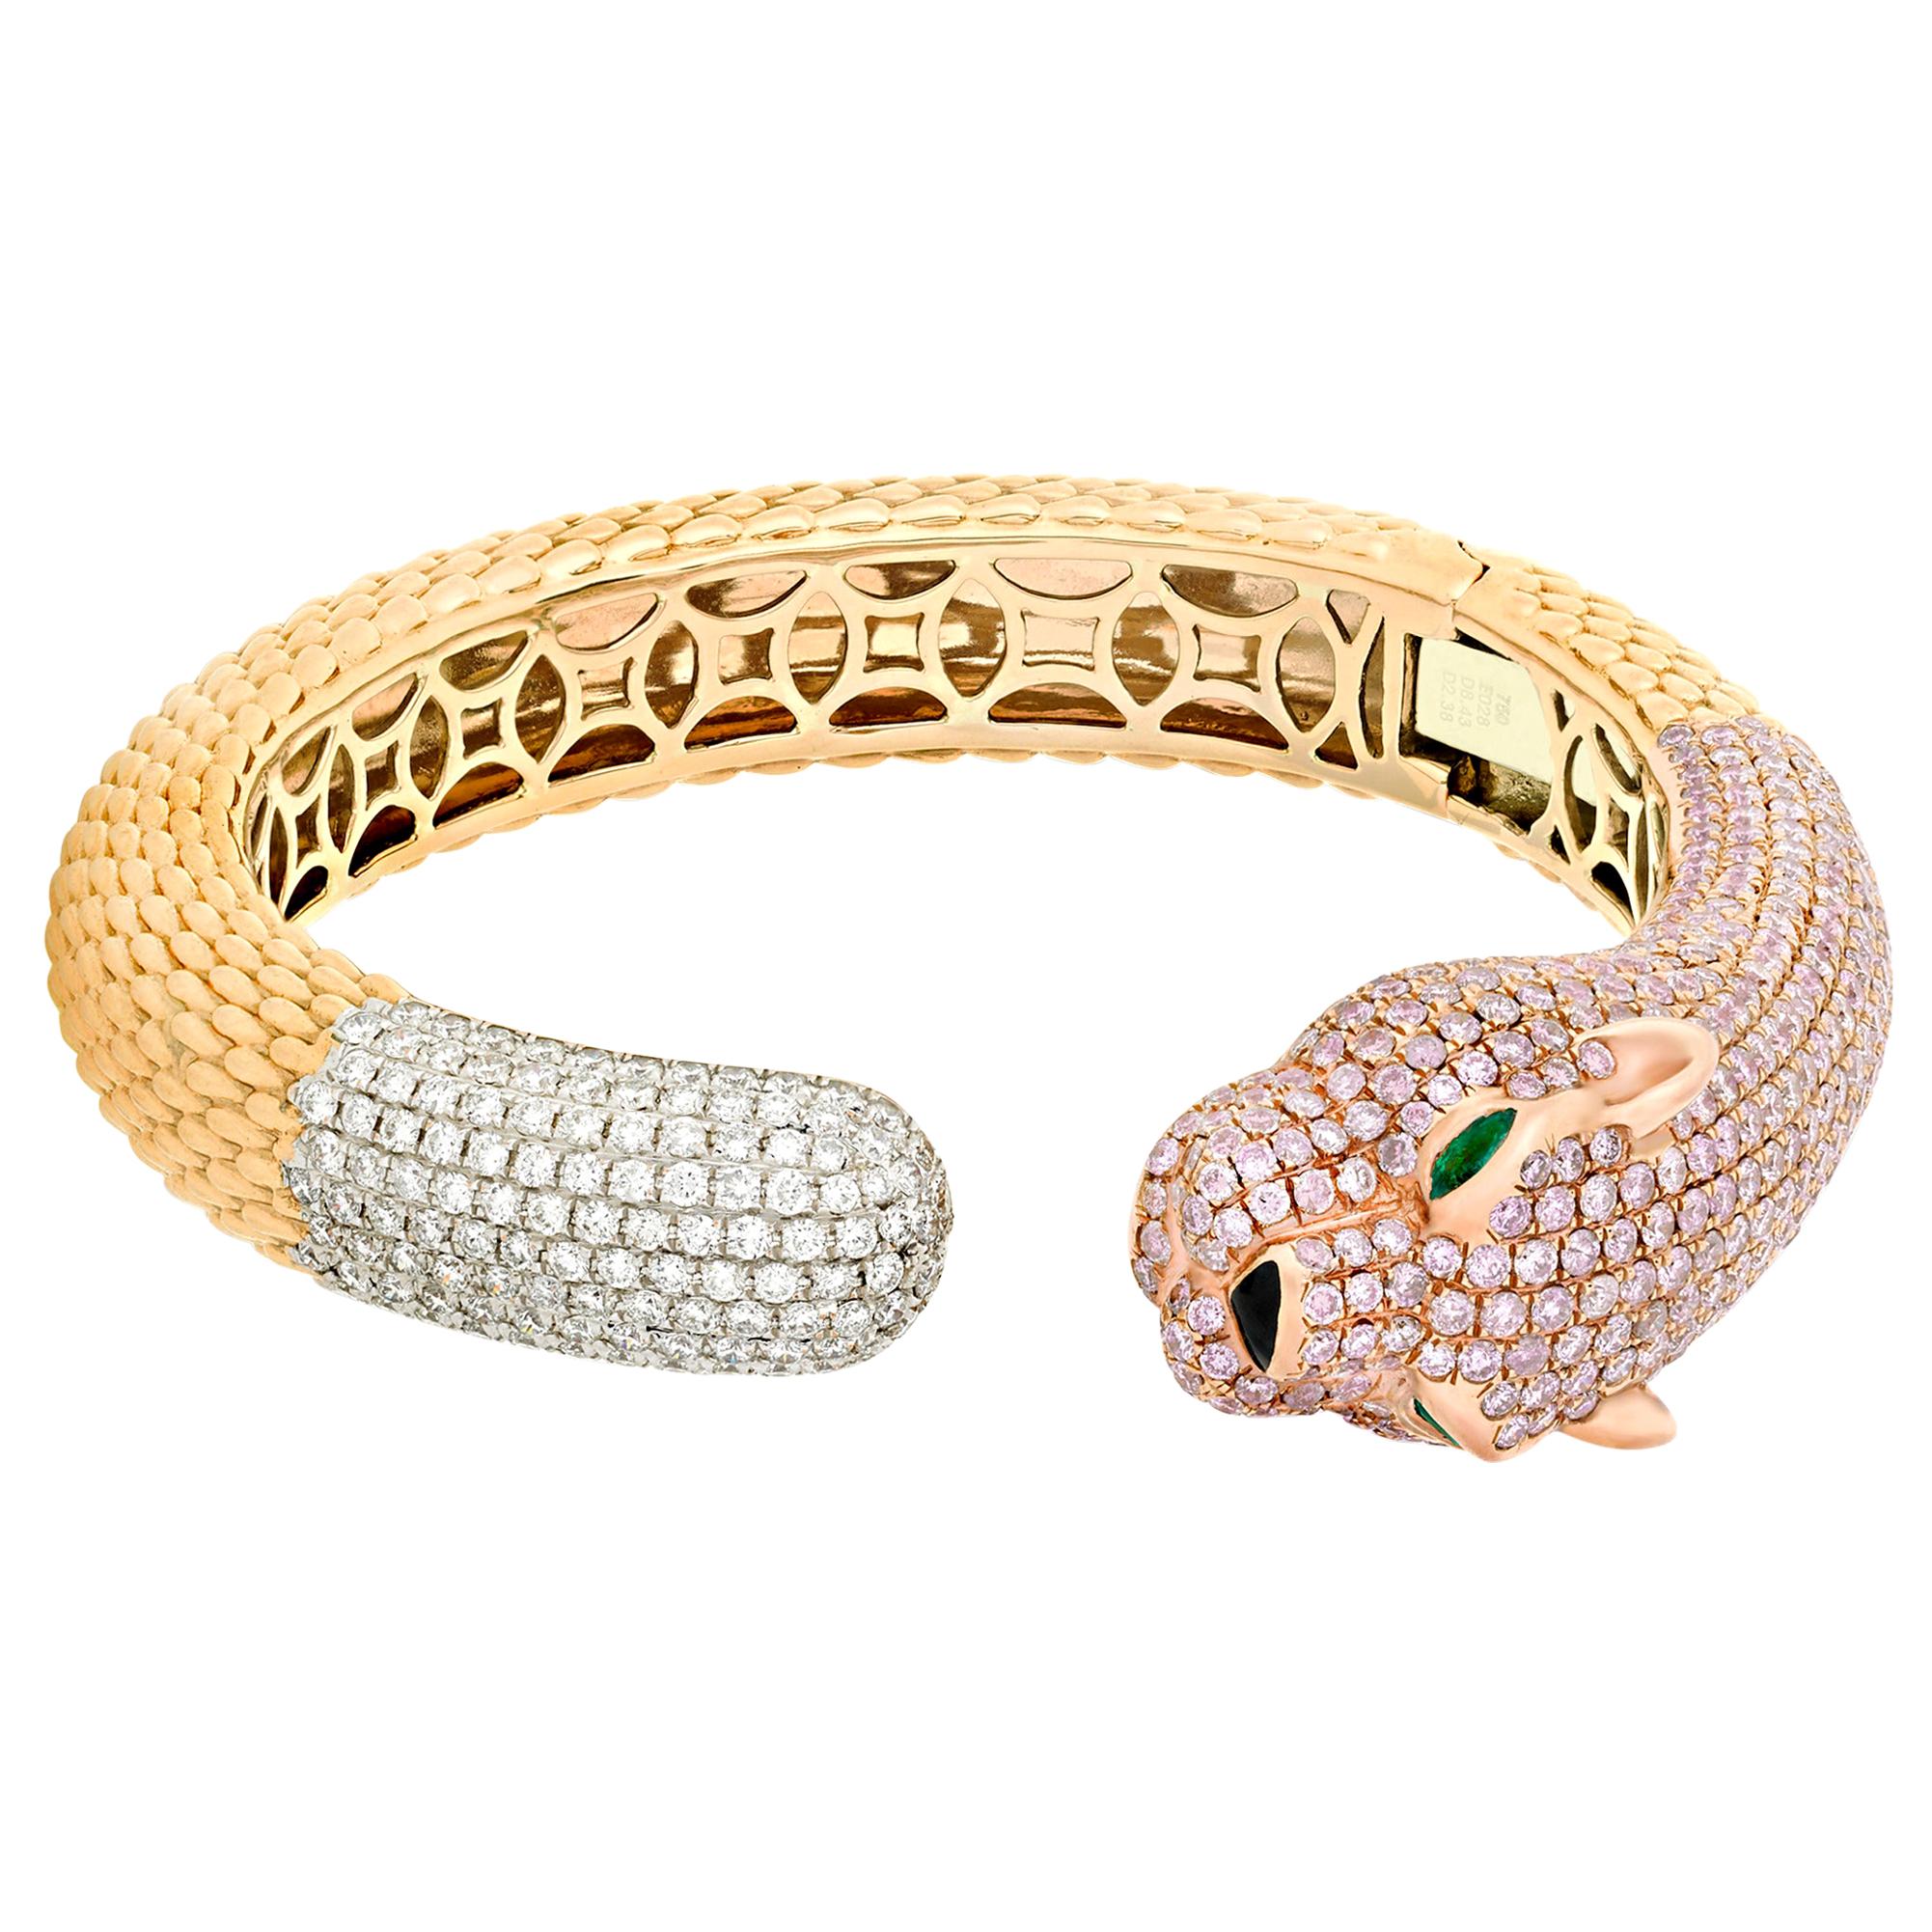 Pink and White Diamond Panther Bangle Bracelet, 8.43 Carat